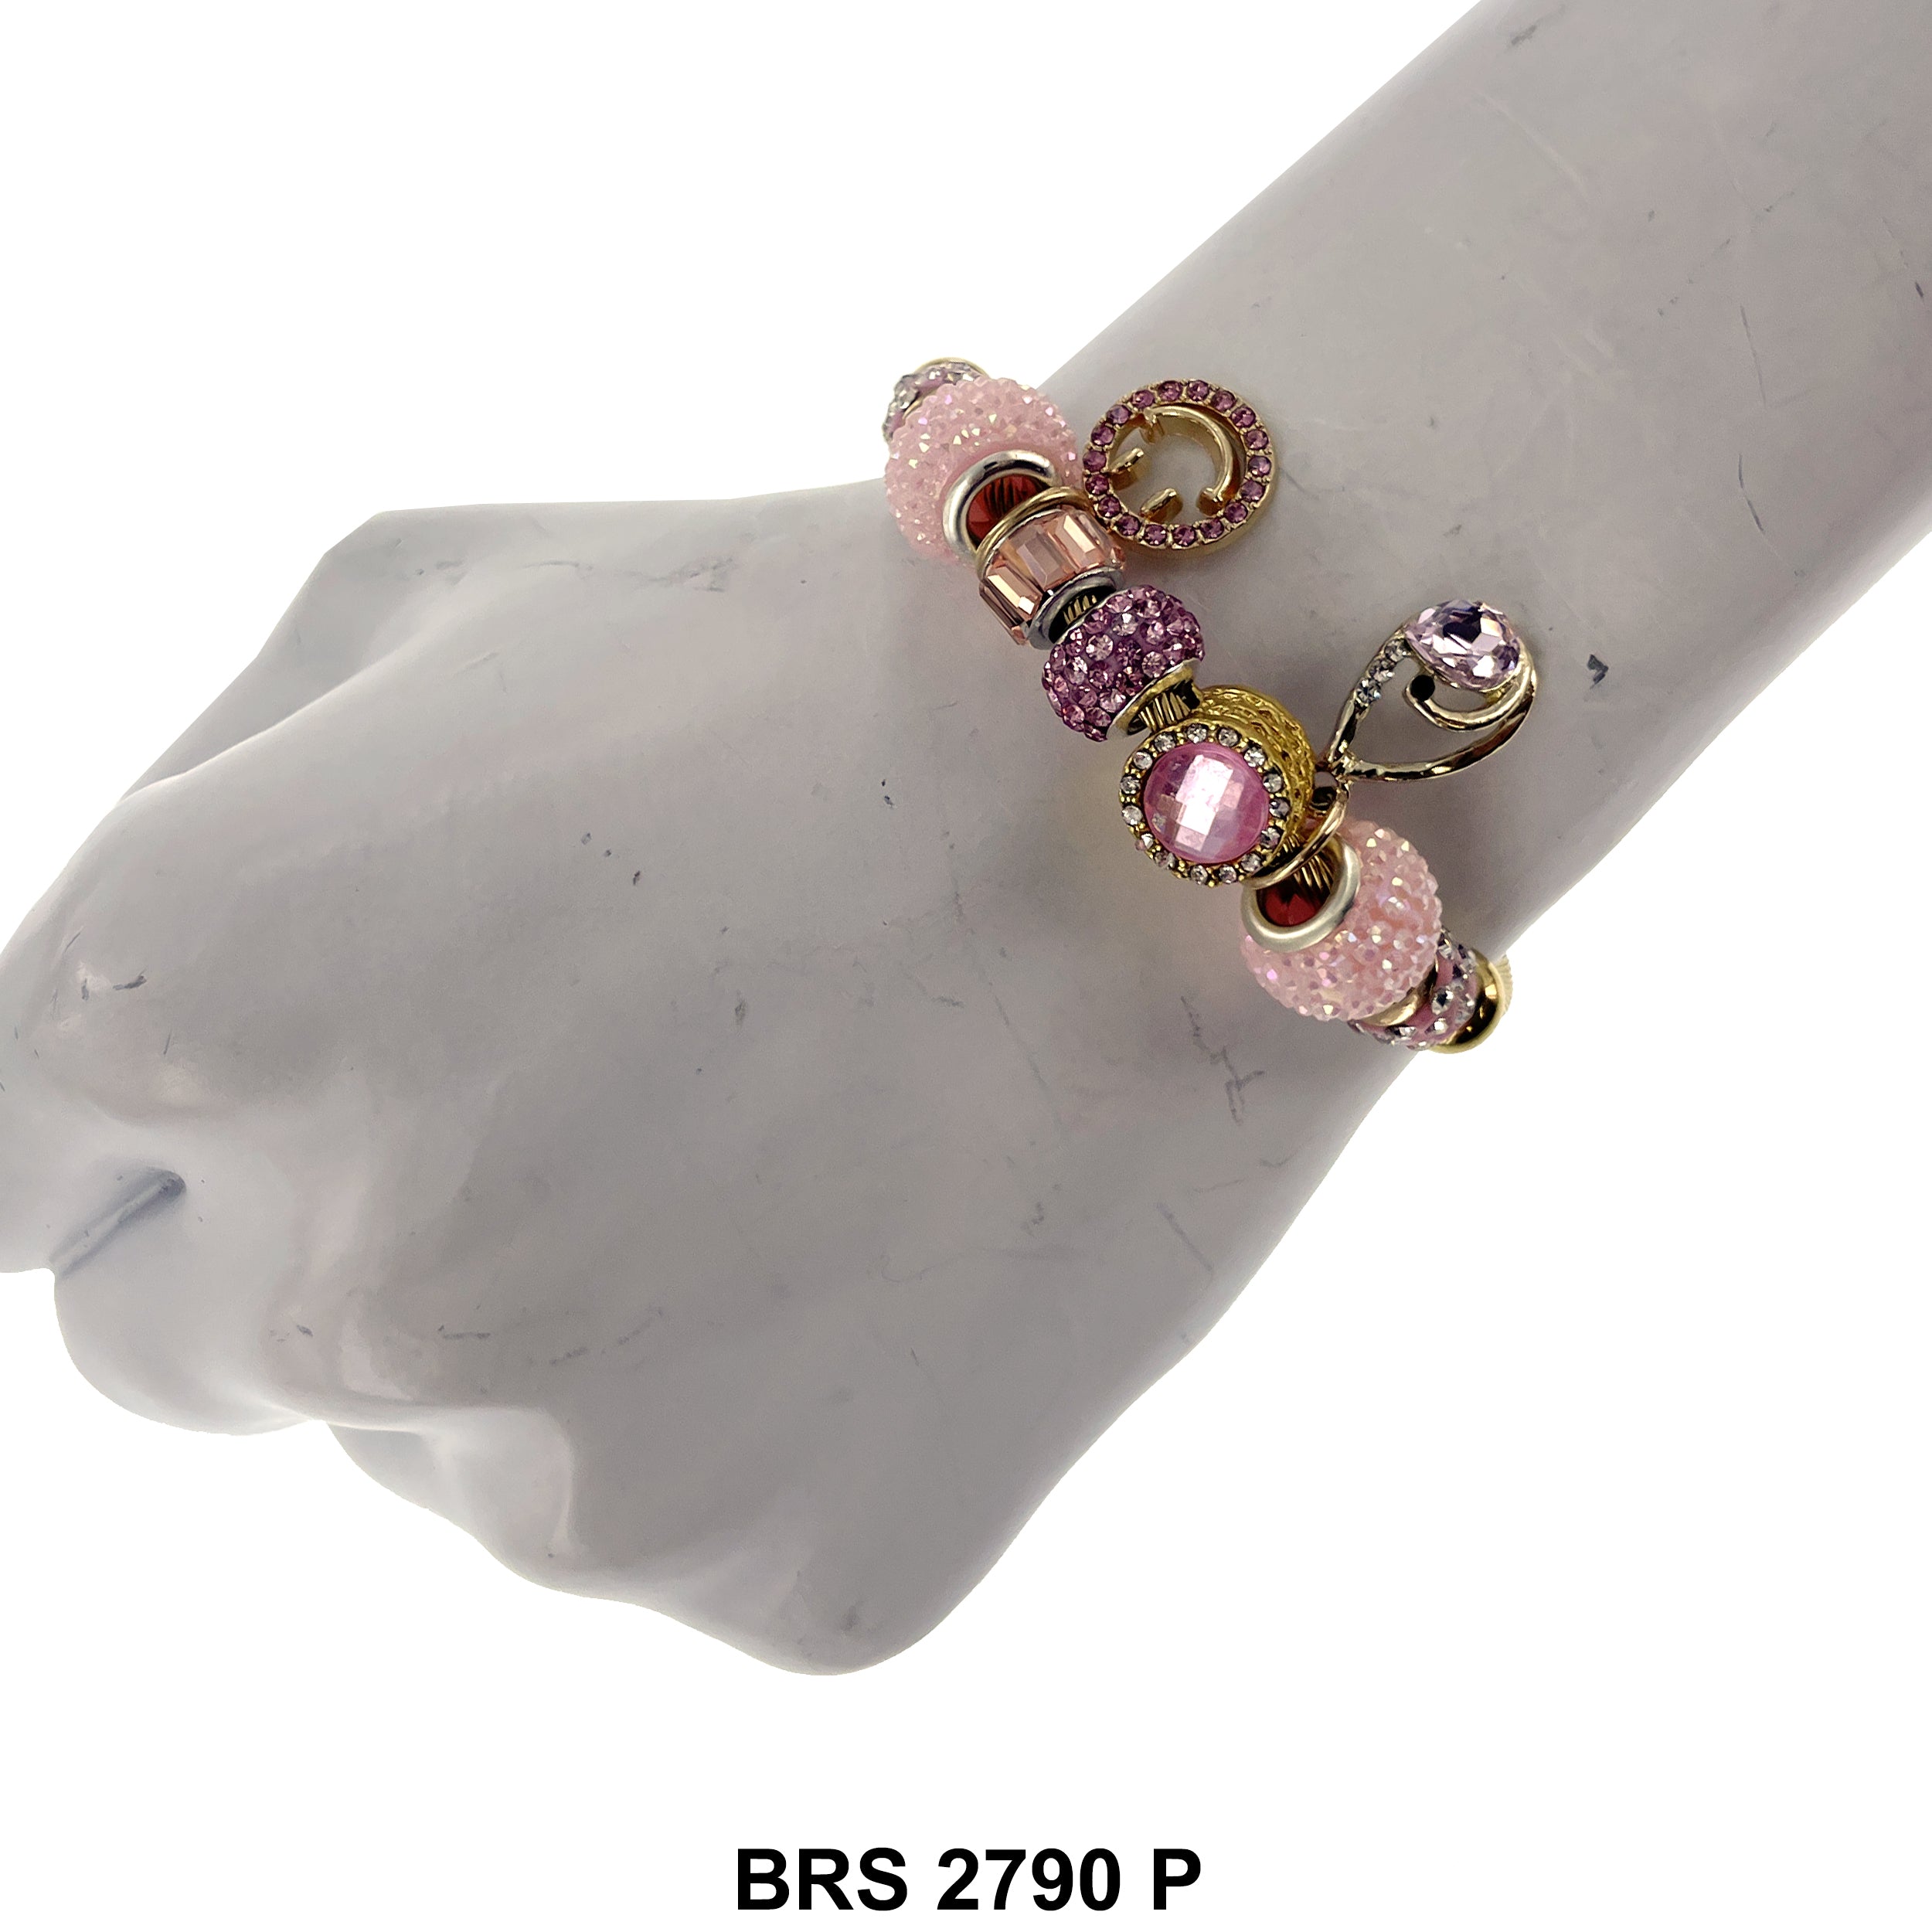 Hanging Charm Bracelet BRS 2790 P